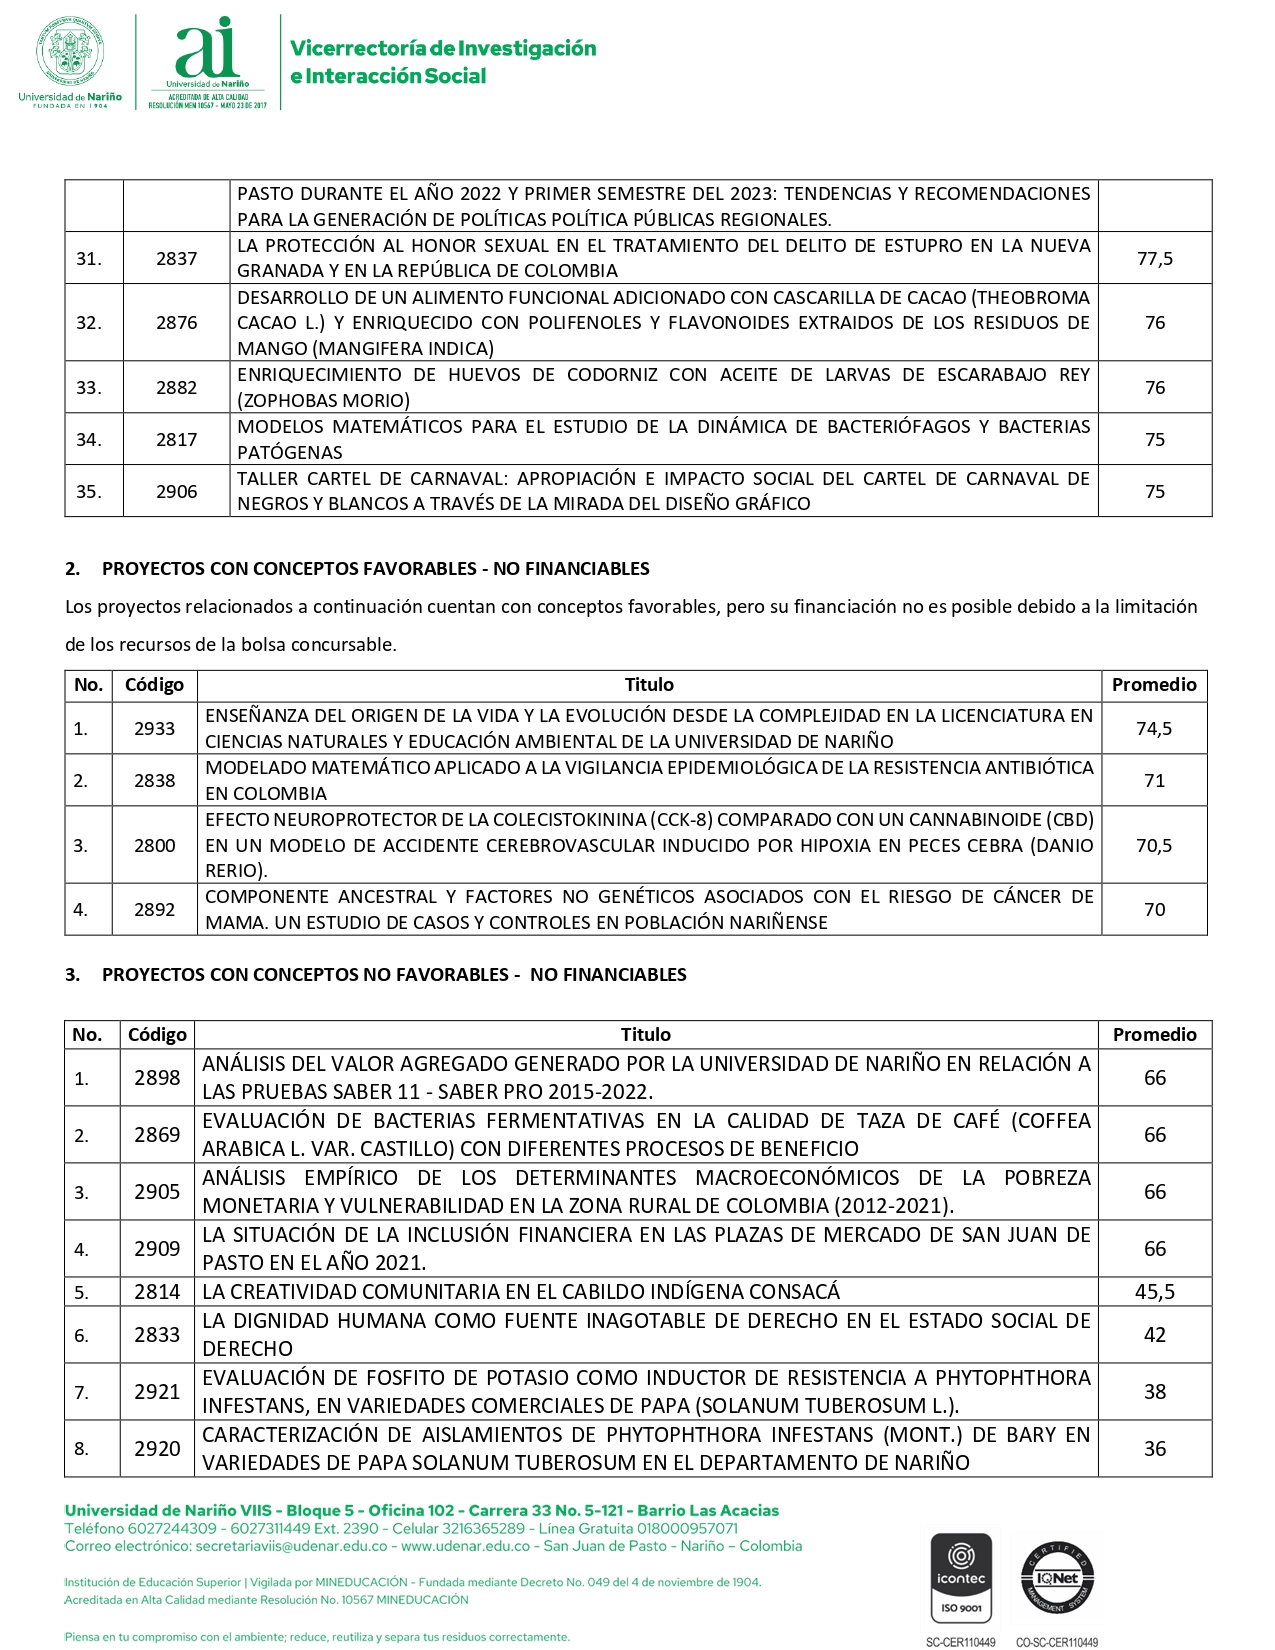 UDENAR-PERIODICO-COMUNICADO-003-CONVOCATORIAS-DE-INVESTIGACION-2_page-0003